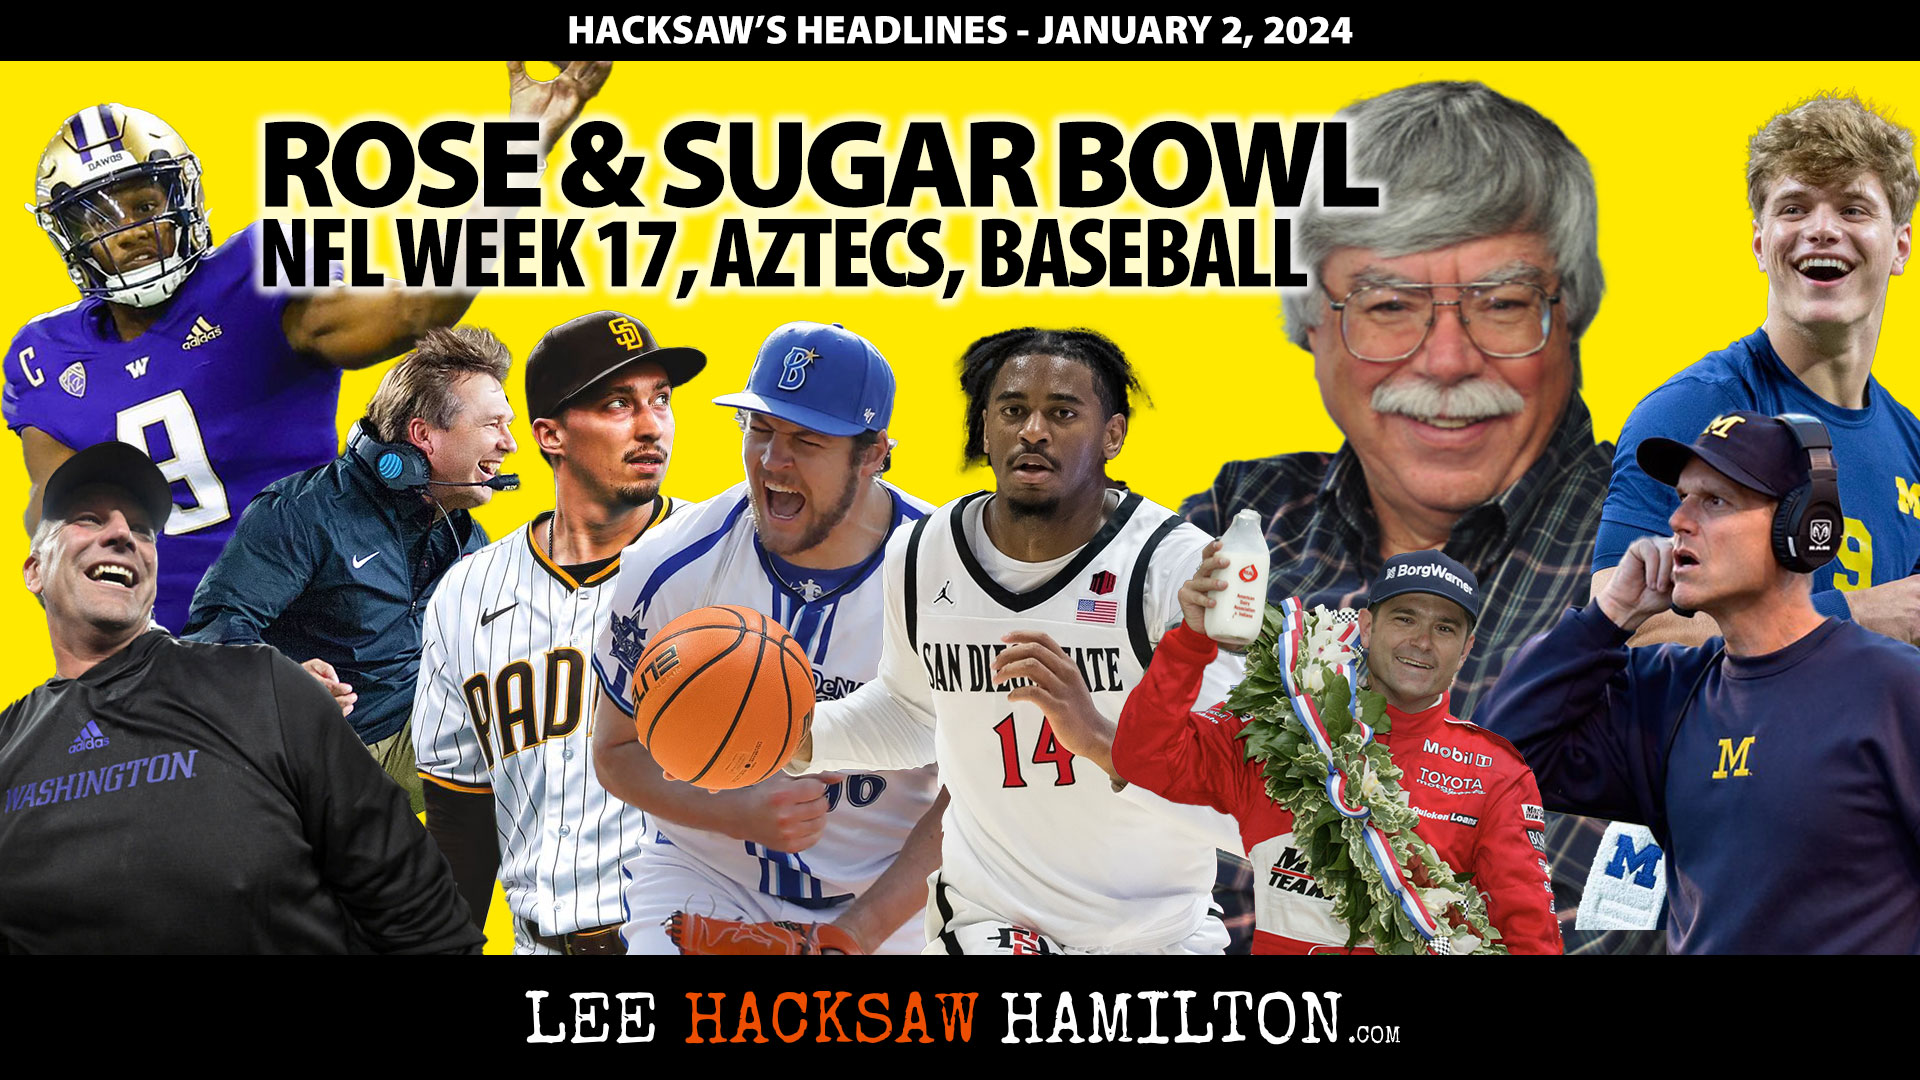 Lee Hacksaw Hamilton discusses Rose Bowl, Sugar Bowl, NFL Blowouts, Lions vs Refs, MLB Free Agency, Aztecs